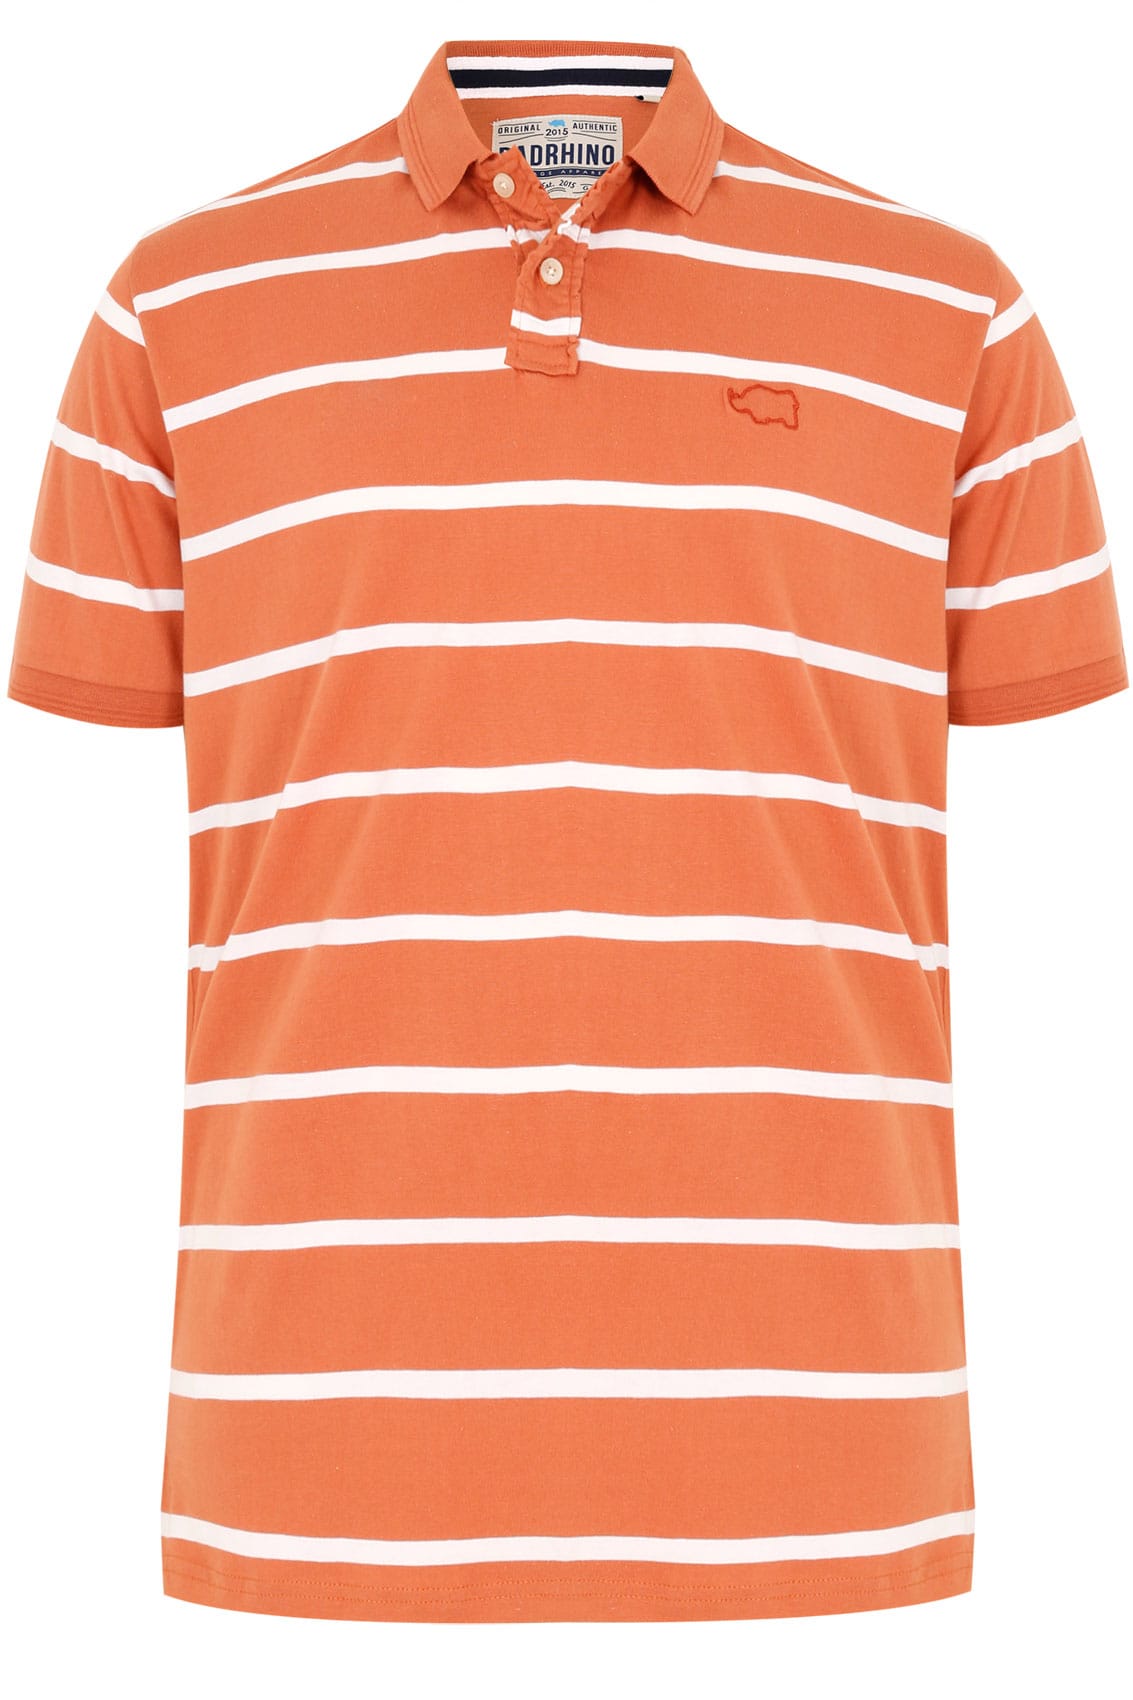 BadRhino Orange Wide Stripe Polo Shirt, Size L to 8XL